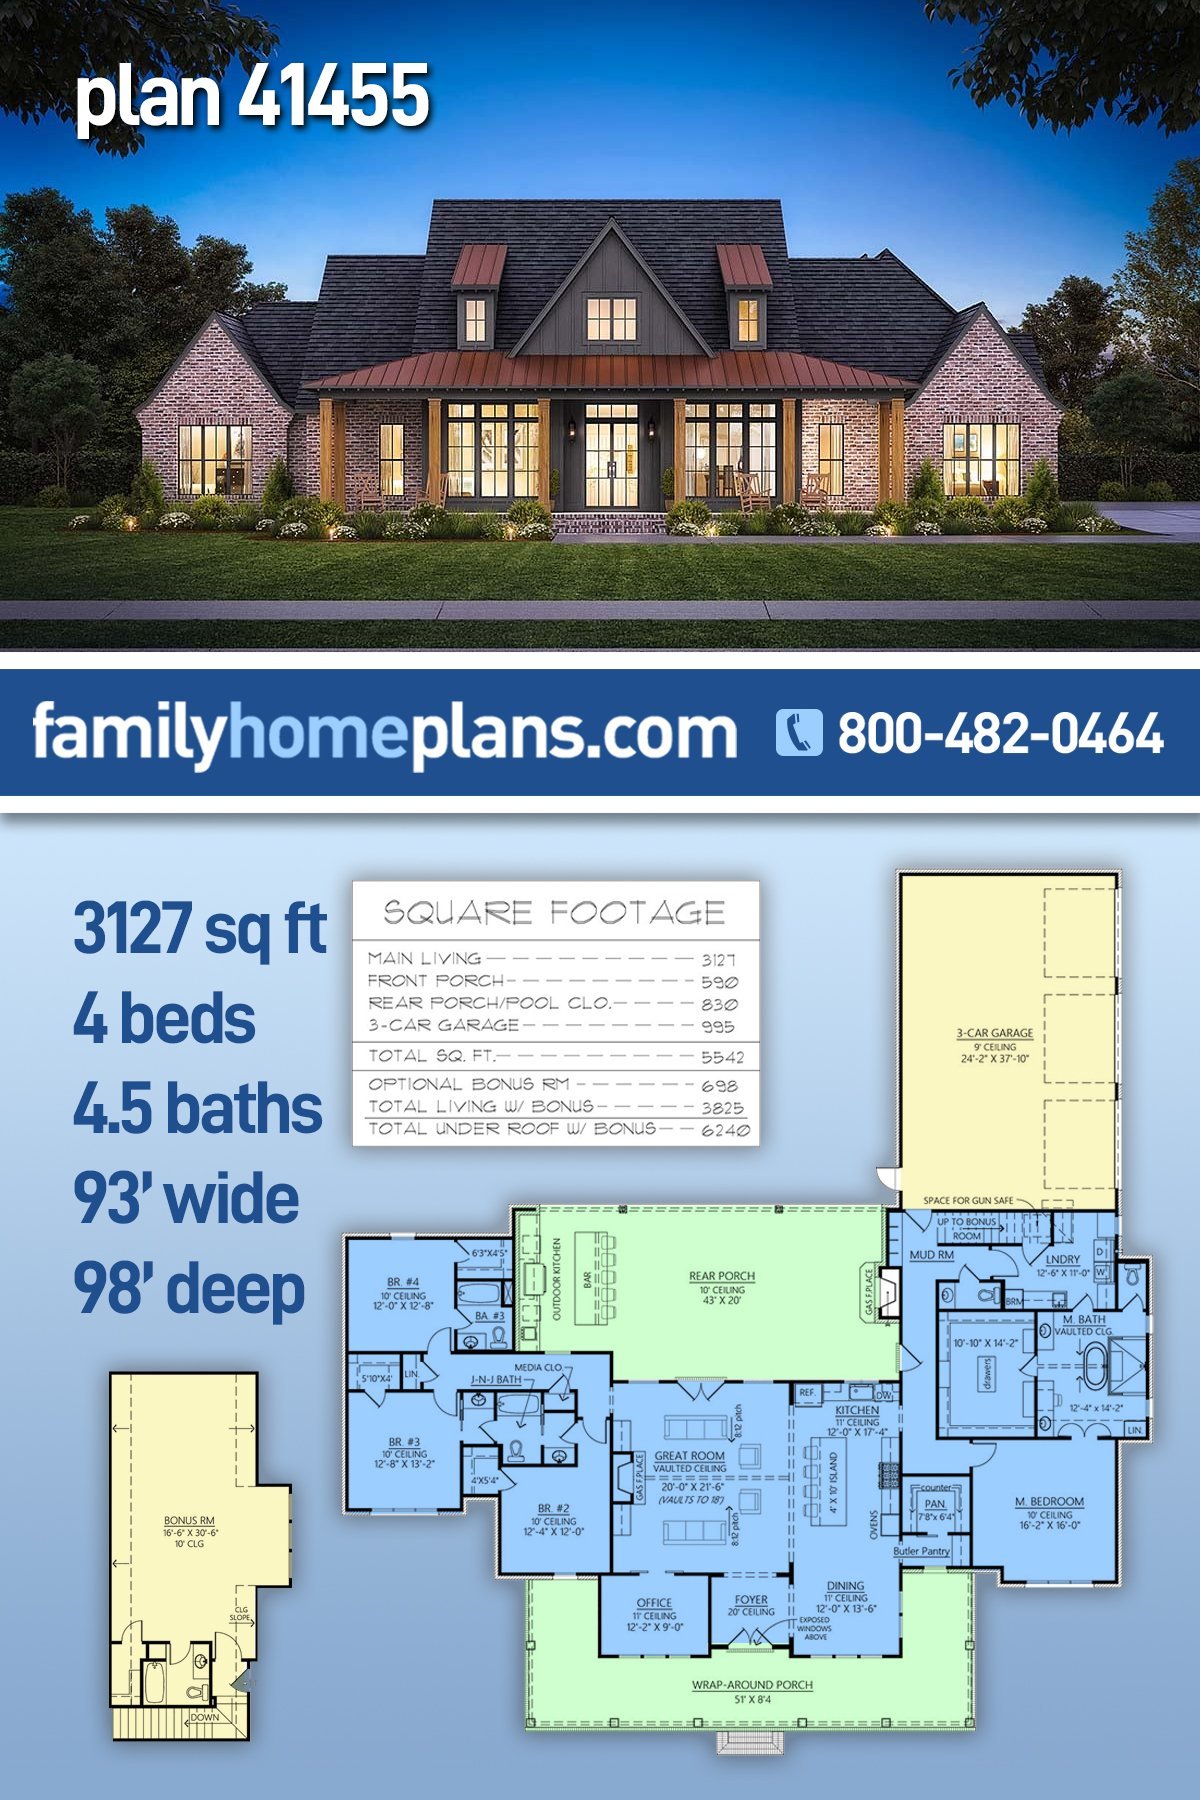 House Plan 41455